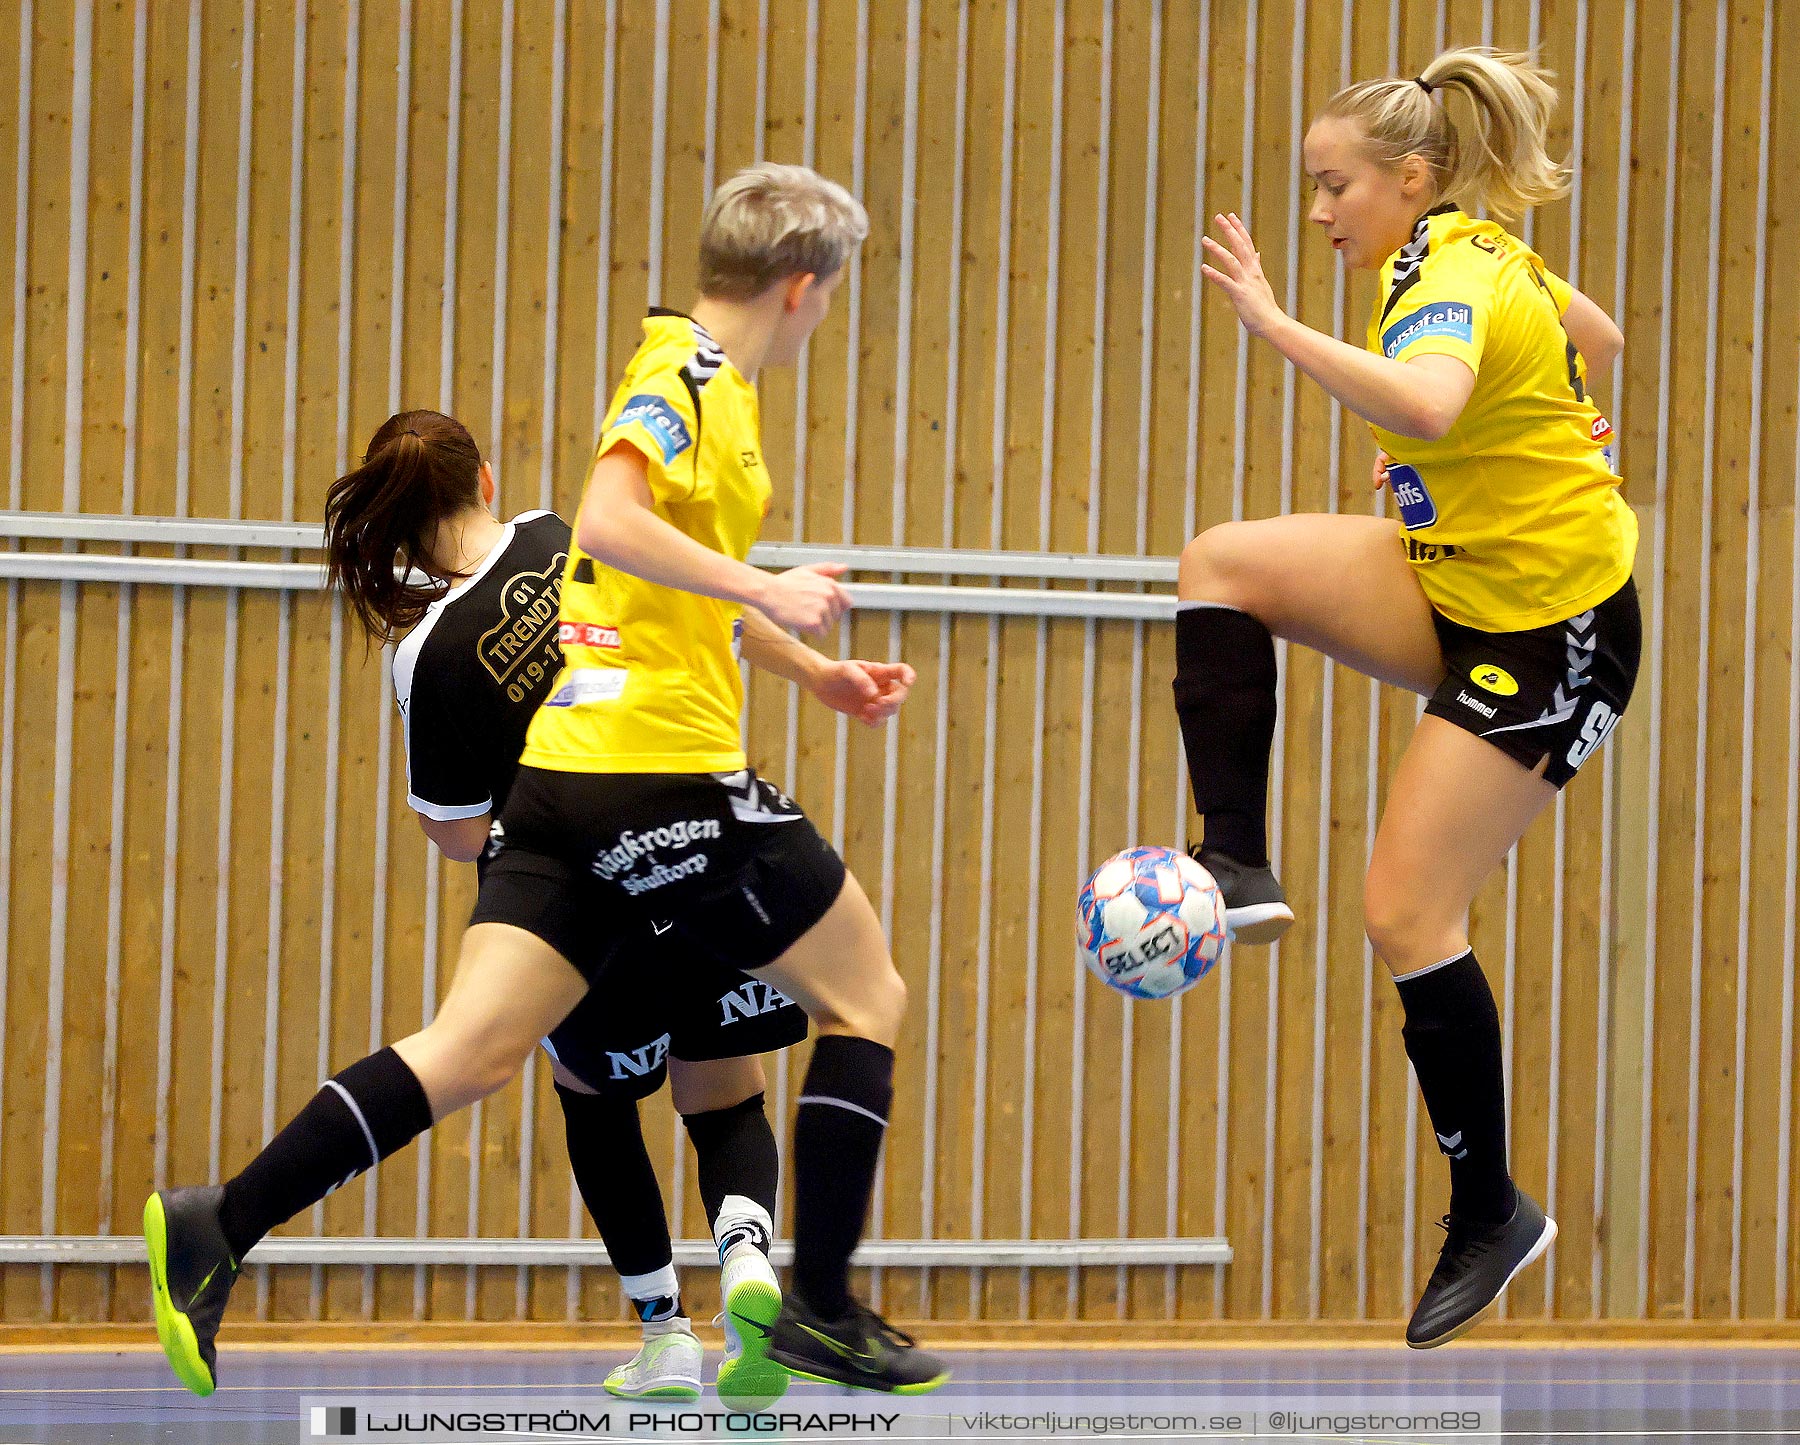 Skövde Futsalcup 2021 Damer Örebro Futsal Club-Skultorps IF 2,dam,Arena Skövde,Skövde,Sverige,Futsal,,2021,270500